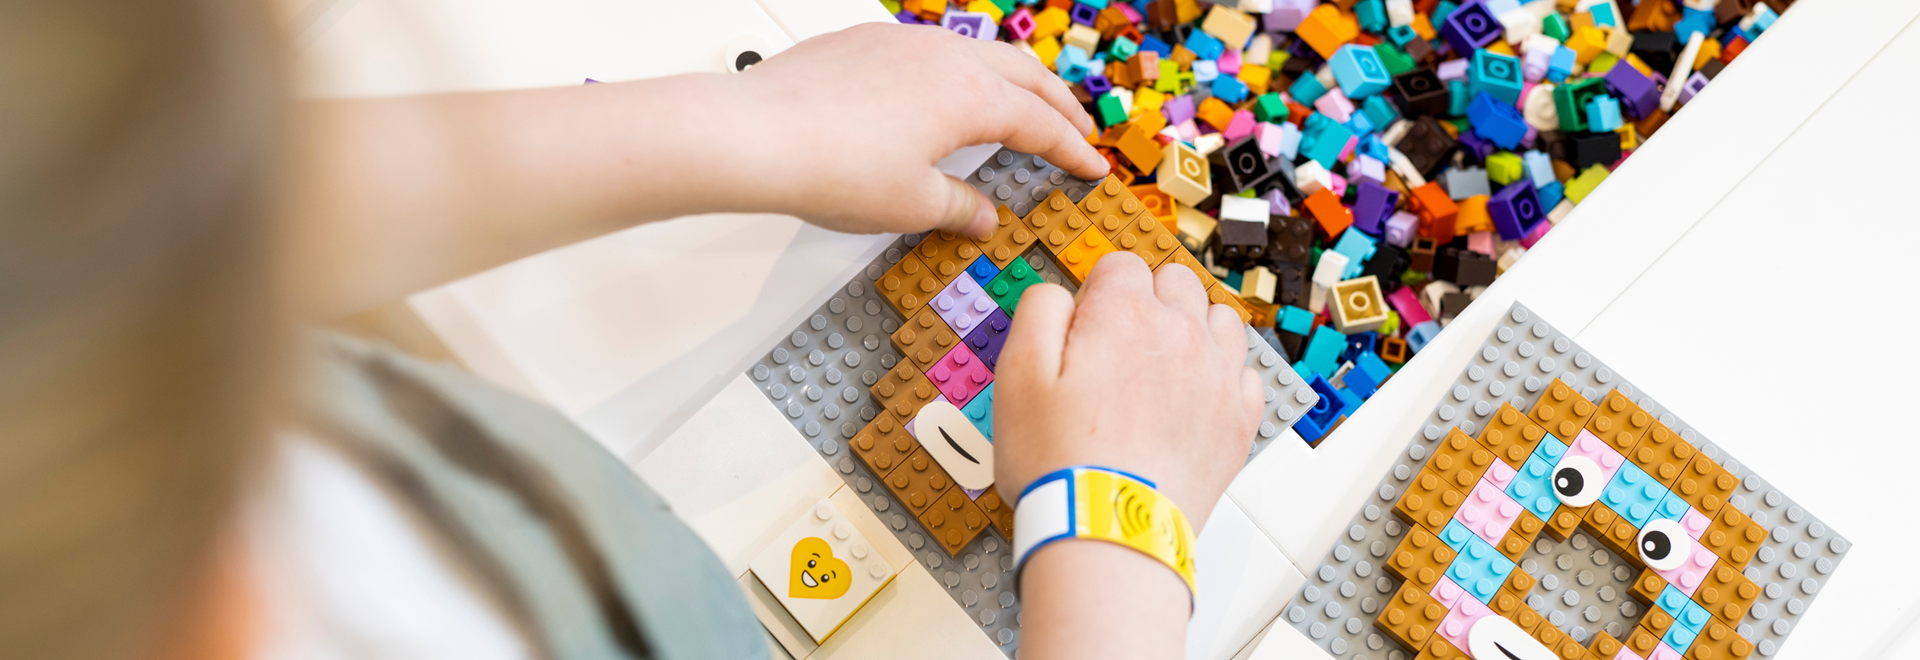 Skoleprogram i LEGO House - læring gennem leg